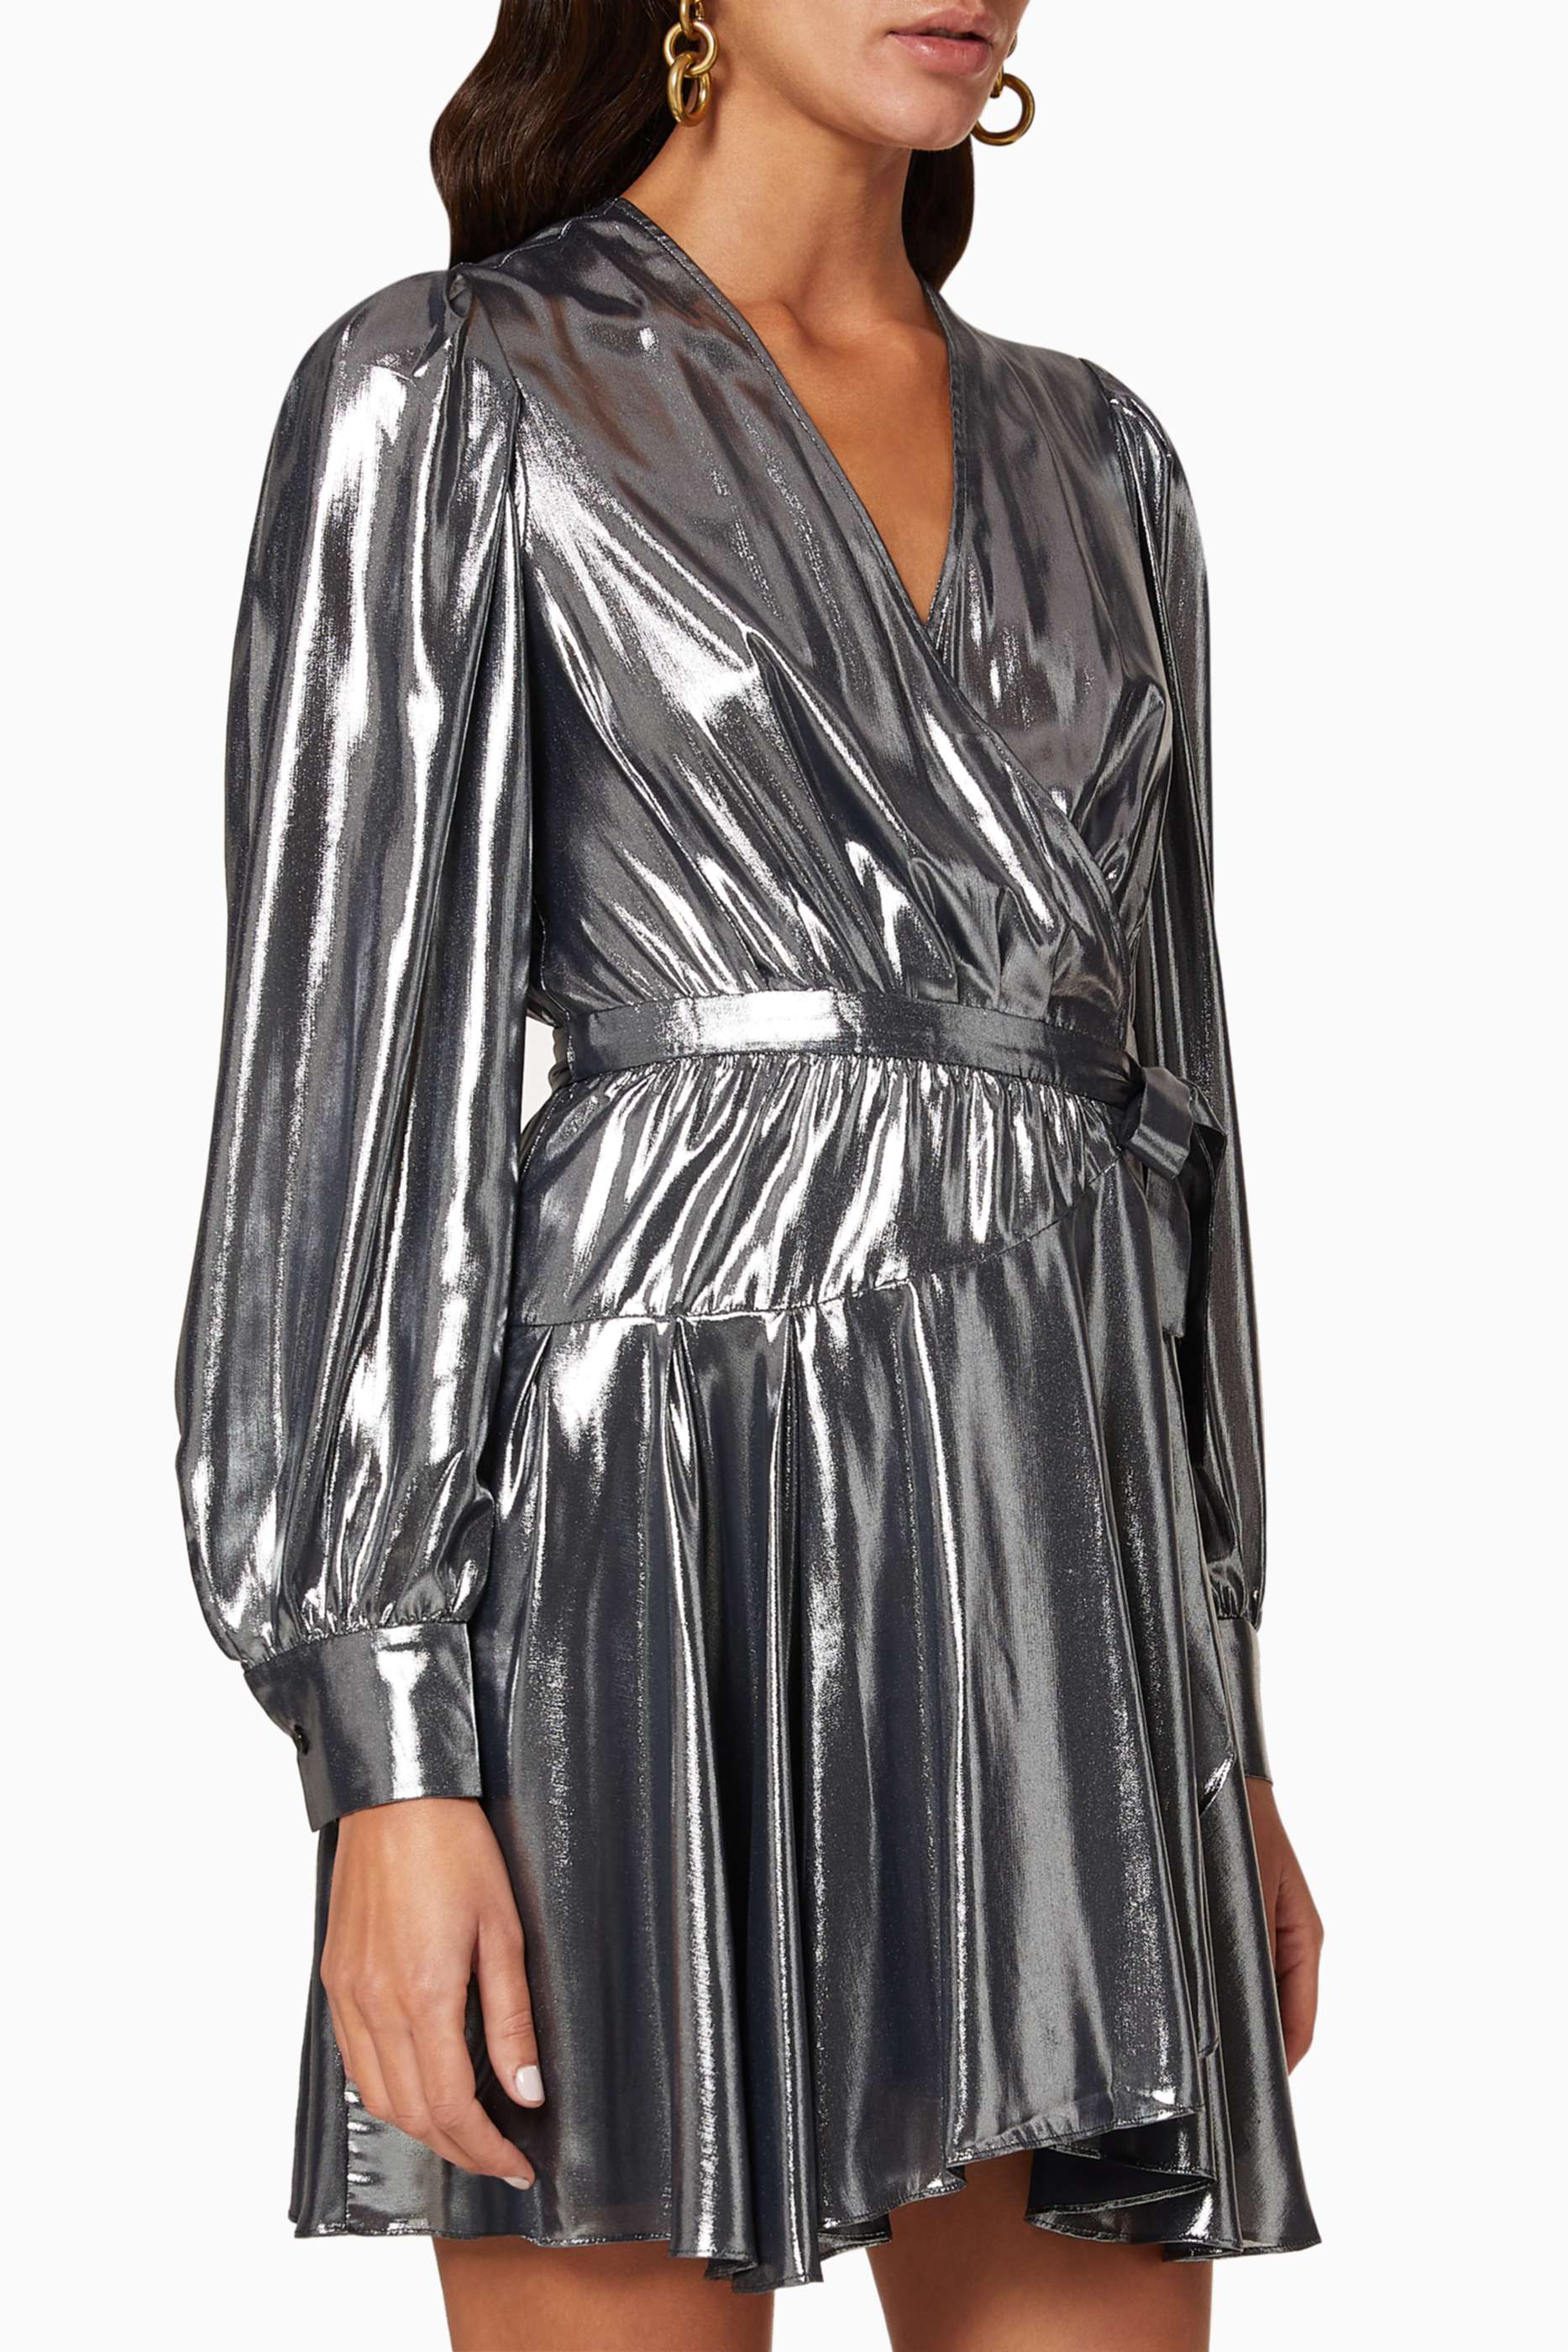 Shop IRO Silver Matcha Metallic Wrap Dress for Women | Ounass Saudi